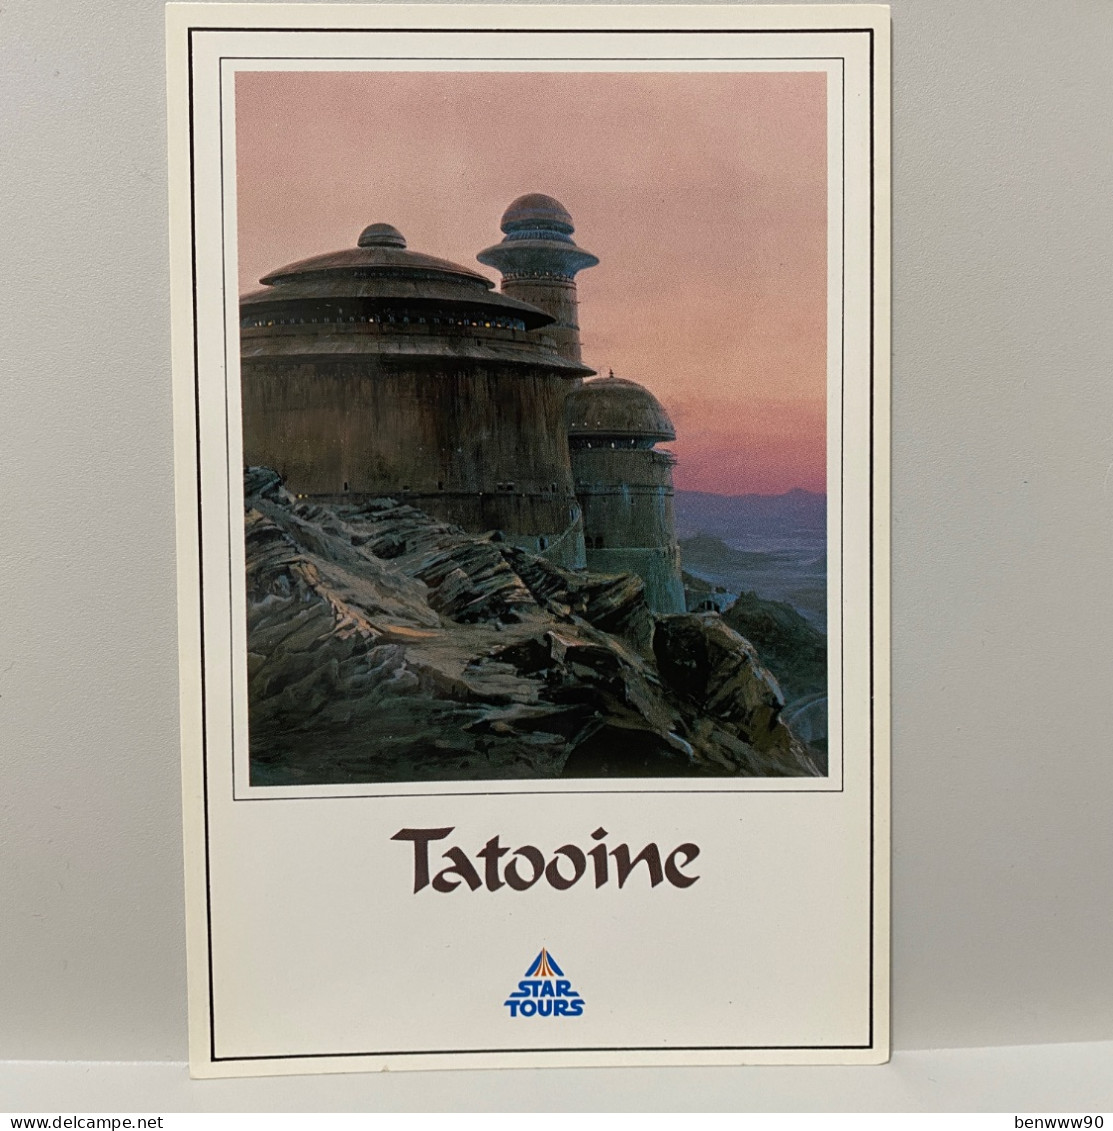 1986 Disneyland Star Tours (Star Wars) Tatooine, DISNEYLAND Postcard - Disneyland